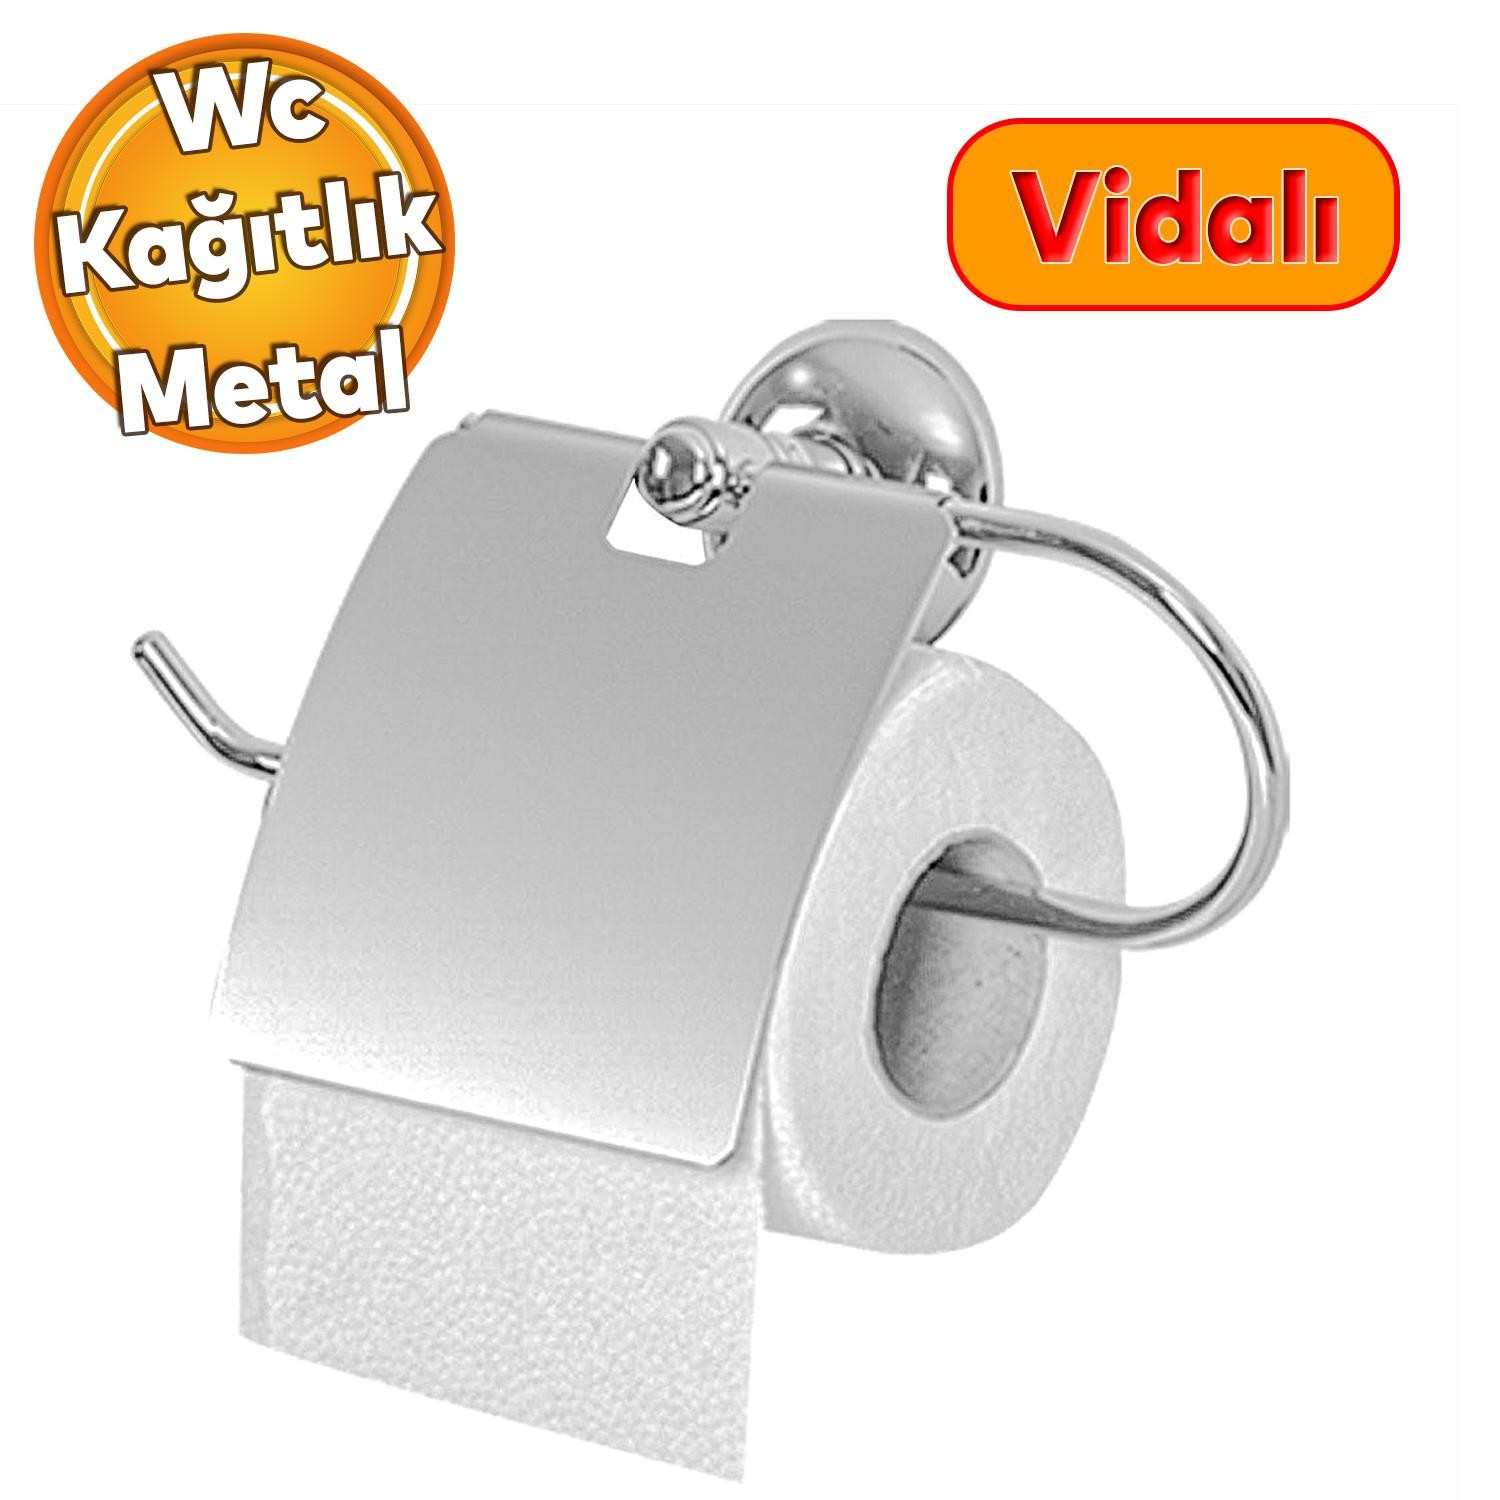 Tuvalet Kağıtlık Aparat Kapalı WC Kağıt Standı Paslanmaz Metal Sağlam Vidalı Krom Renk